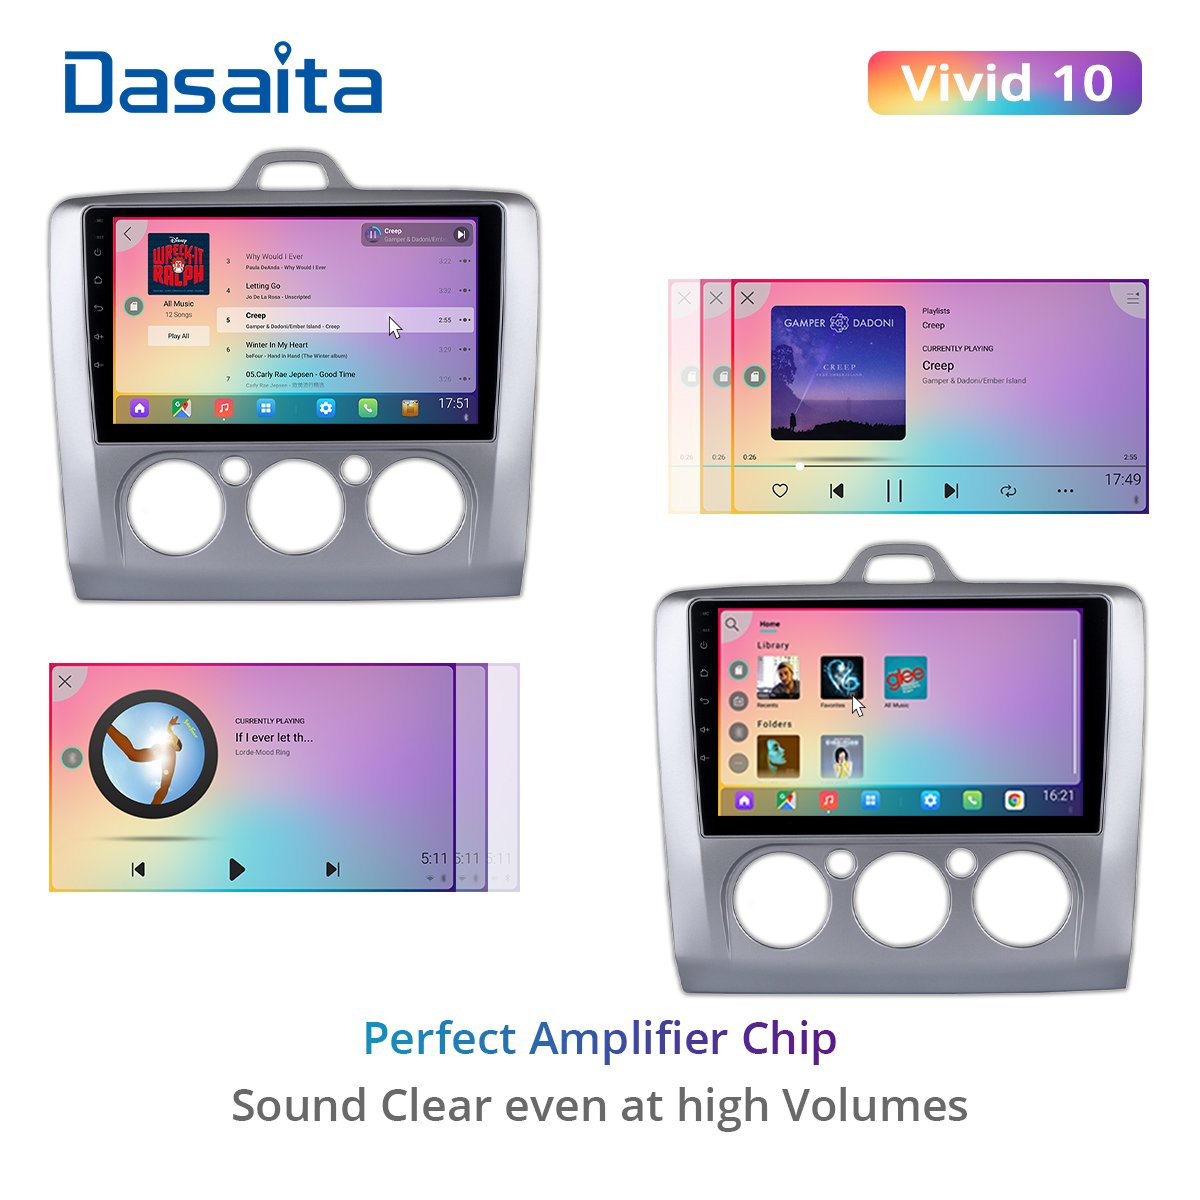 Dasaita Vivid For Ford Focus (Manual AC) 2004-2011 car radio Android 10 Apple Carplay Android Auto Navigation GPS 4G RAM 64G ROM